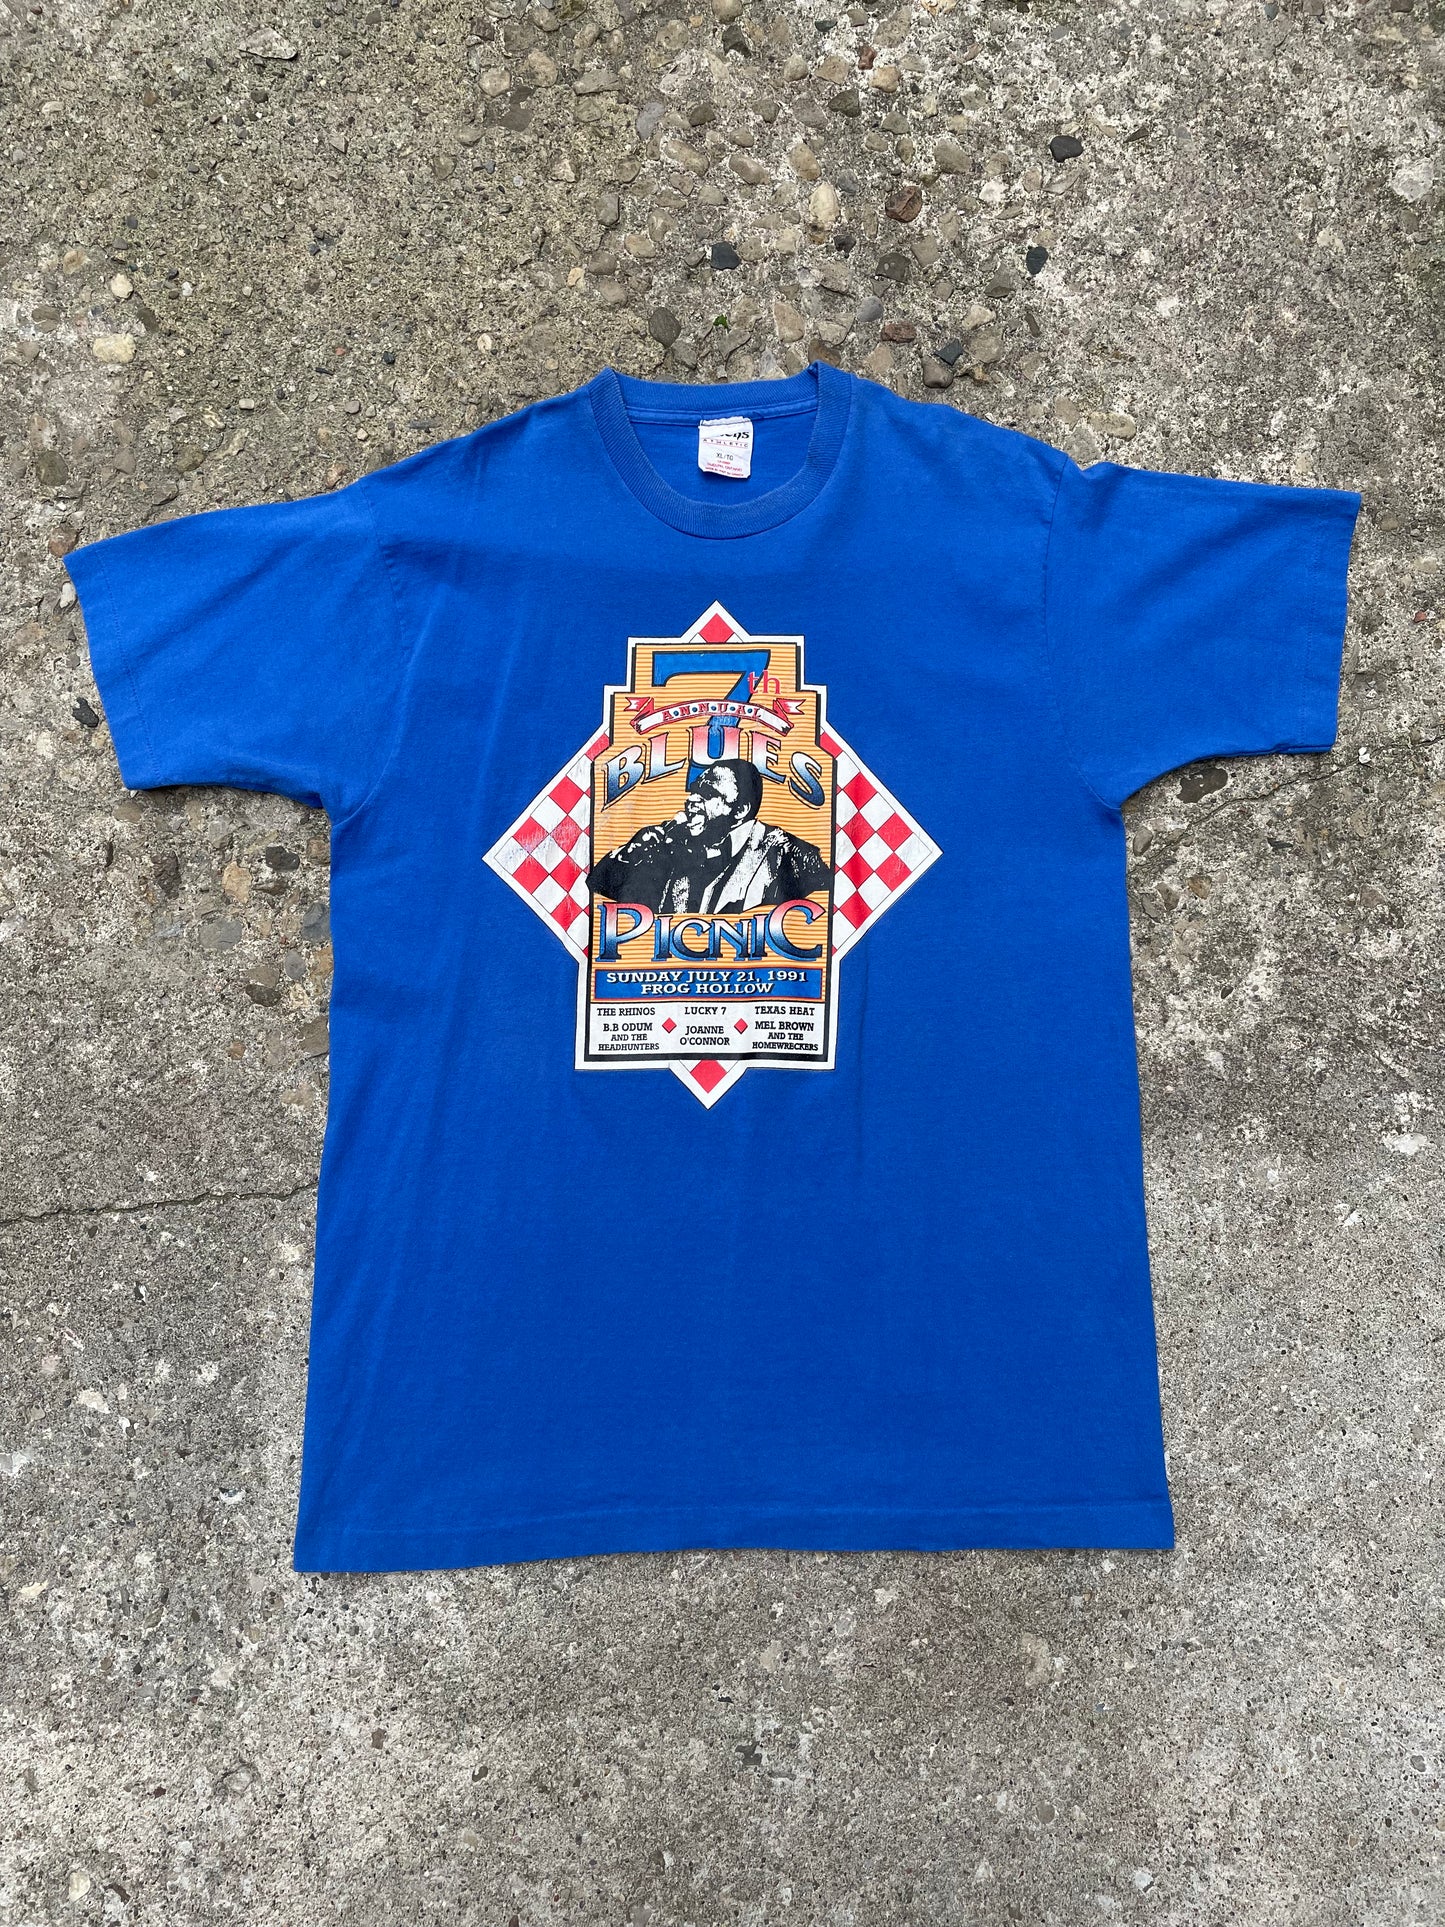 1991 7th Annual Blues Picnic T-Shirt - XL